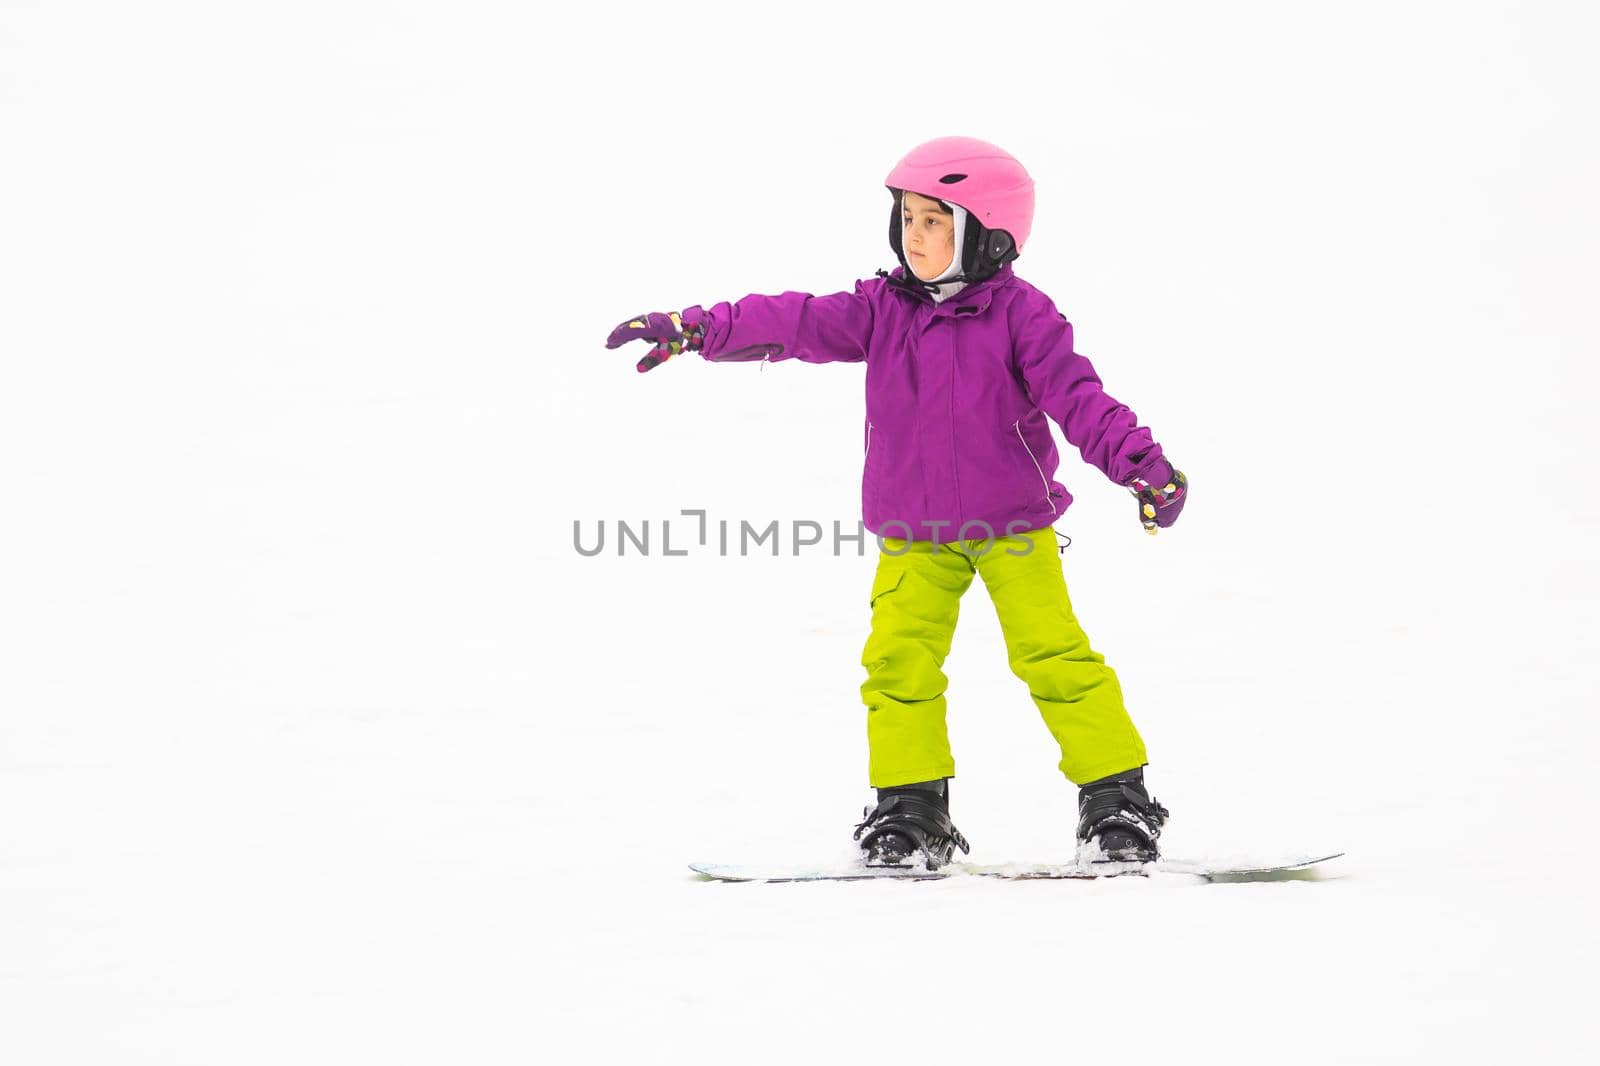 Little Cute Girl Snowboarding at ski resort in sunny winter day. by Andelov13